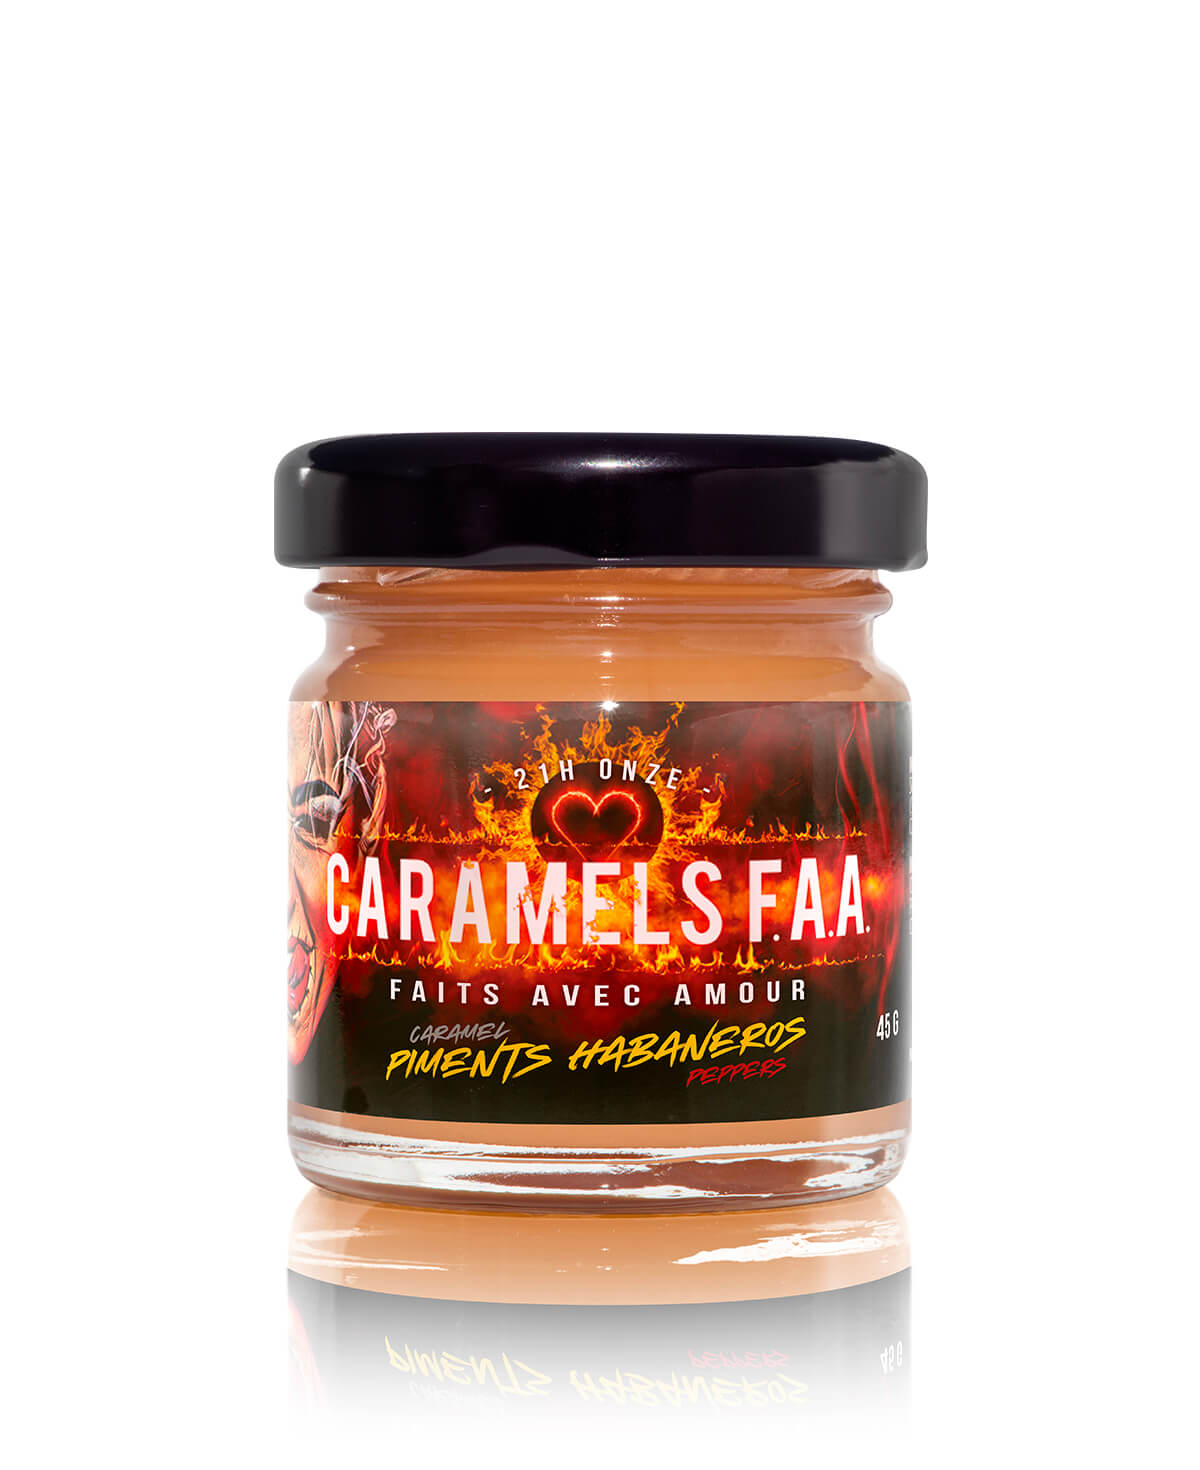 Caramel Piments Habaneros